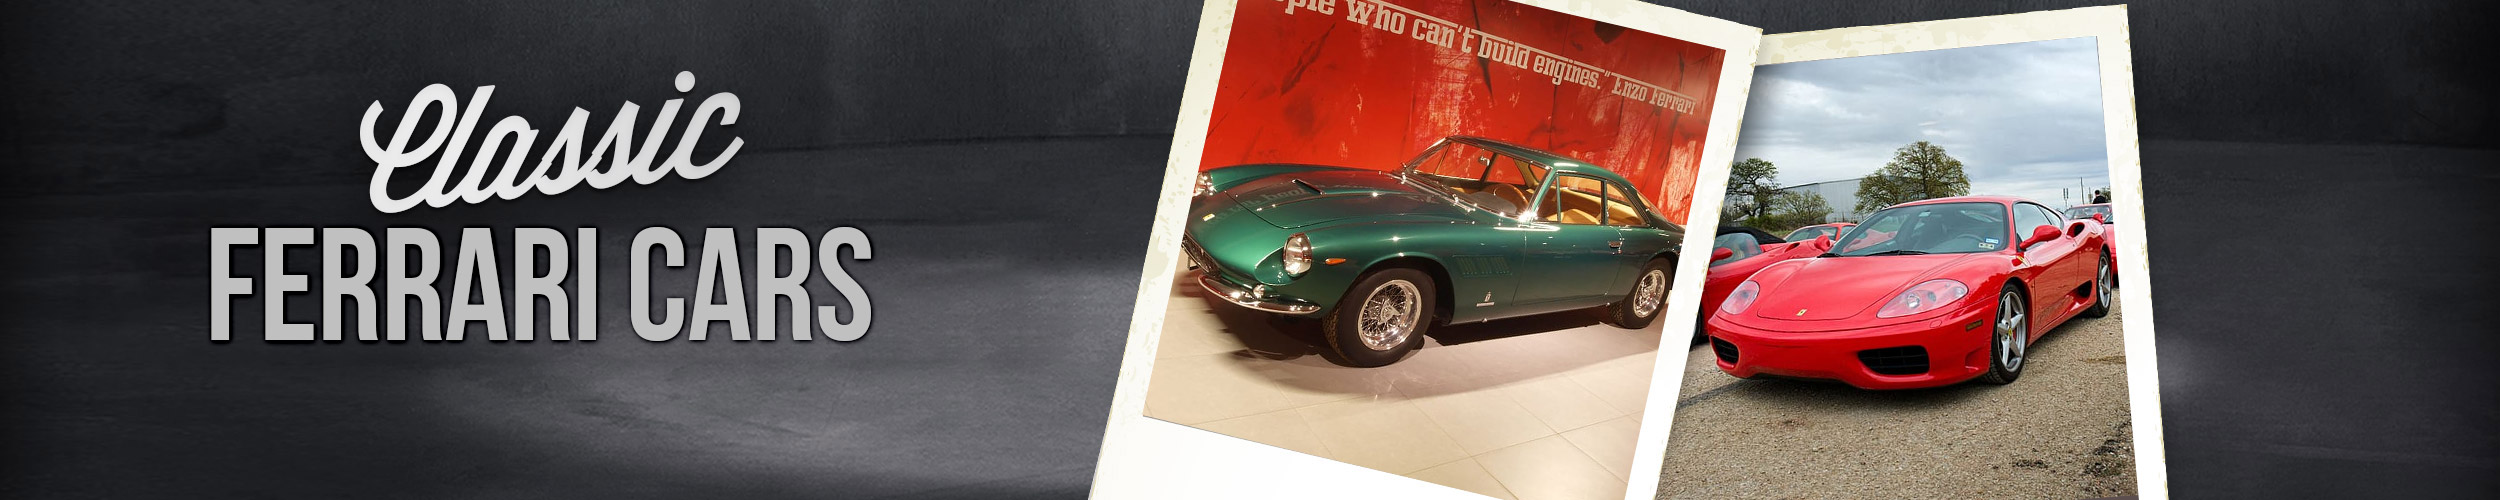 Classic Ferrari Cars | Show Cars of Boca Raton | Boca Raton, FL